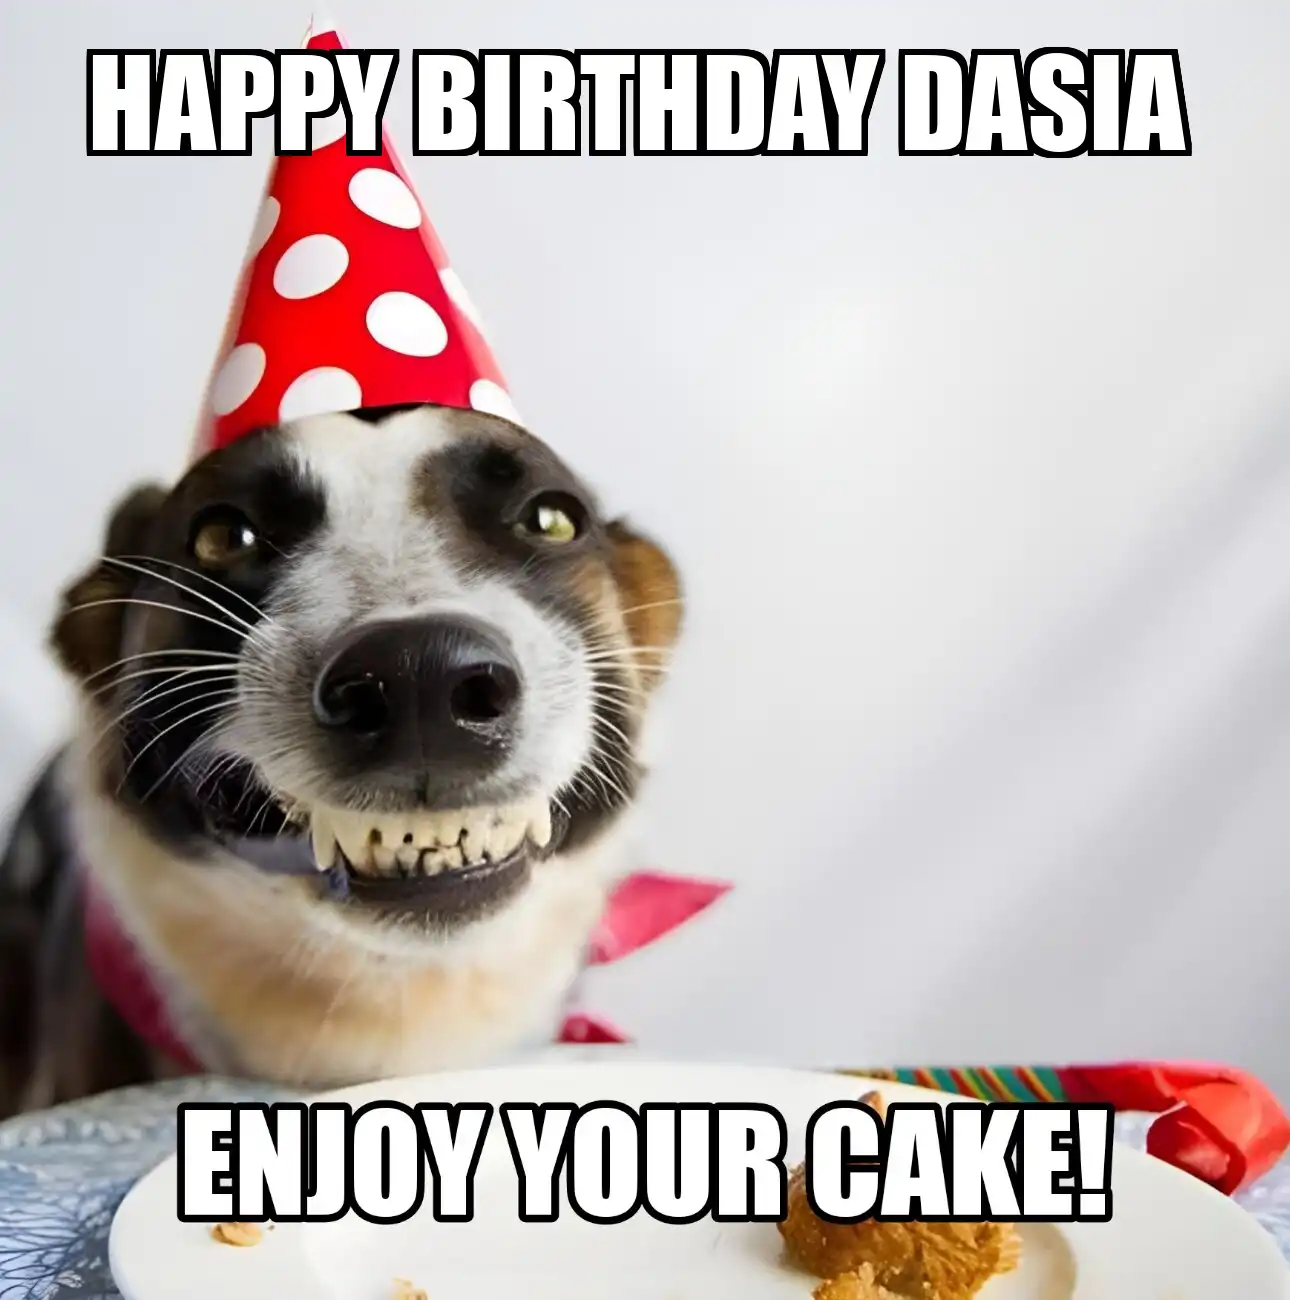 Happy Birthday Dasia Enjoy Your Cake Dog Meme